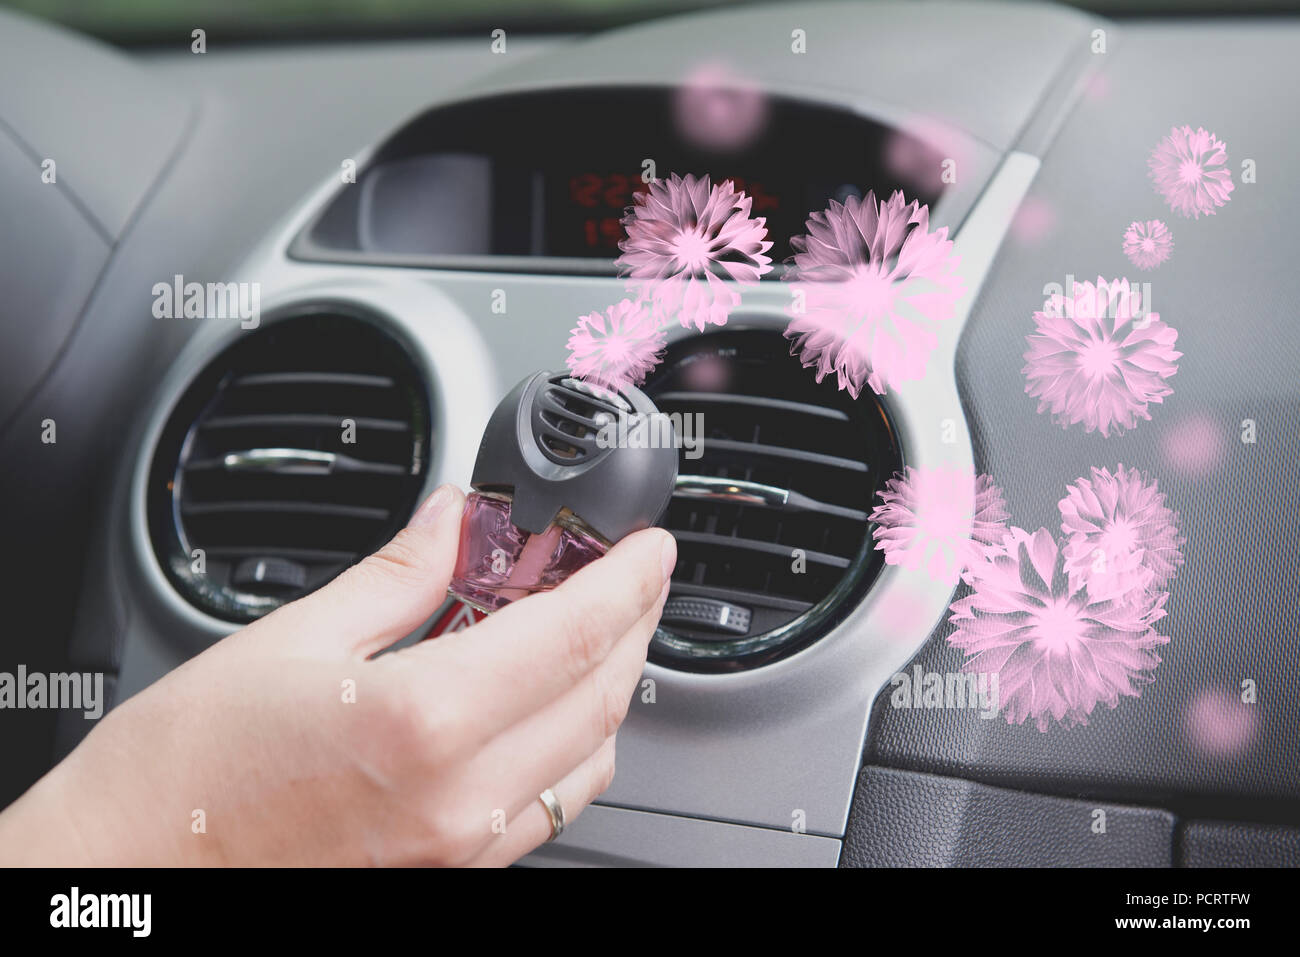 Auto parfüm -Fotos und -Bildmaterial in hoher Auflösung – Alamy